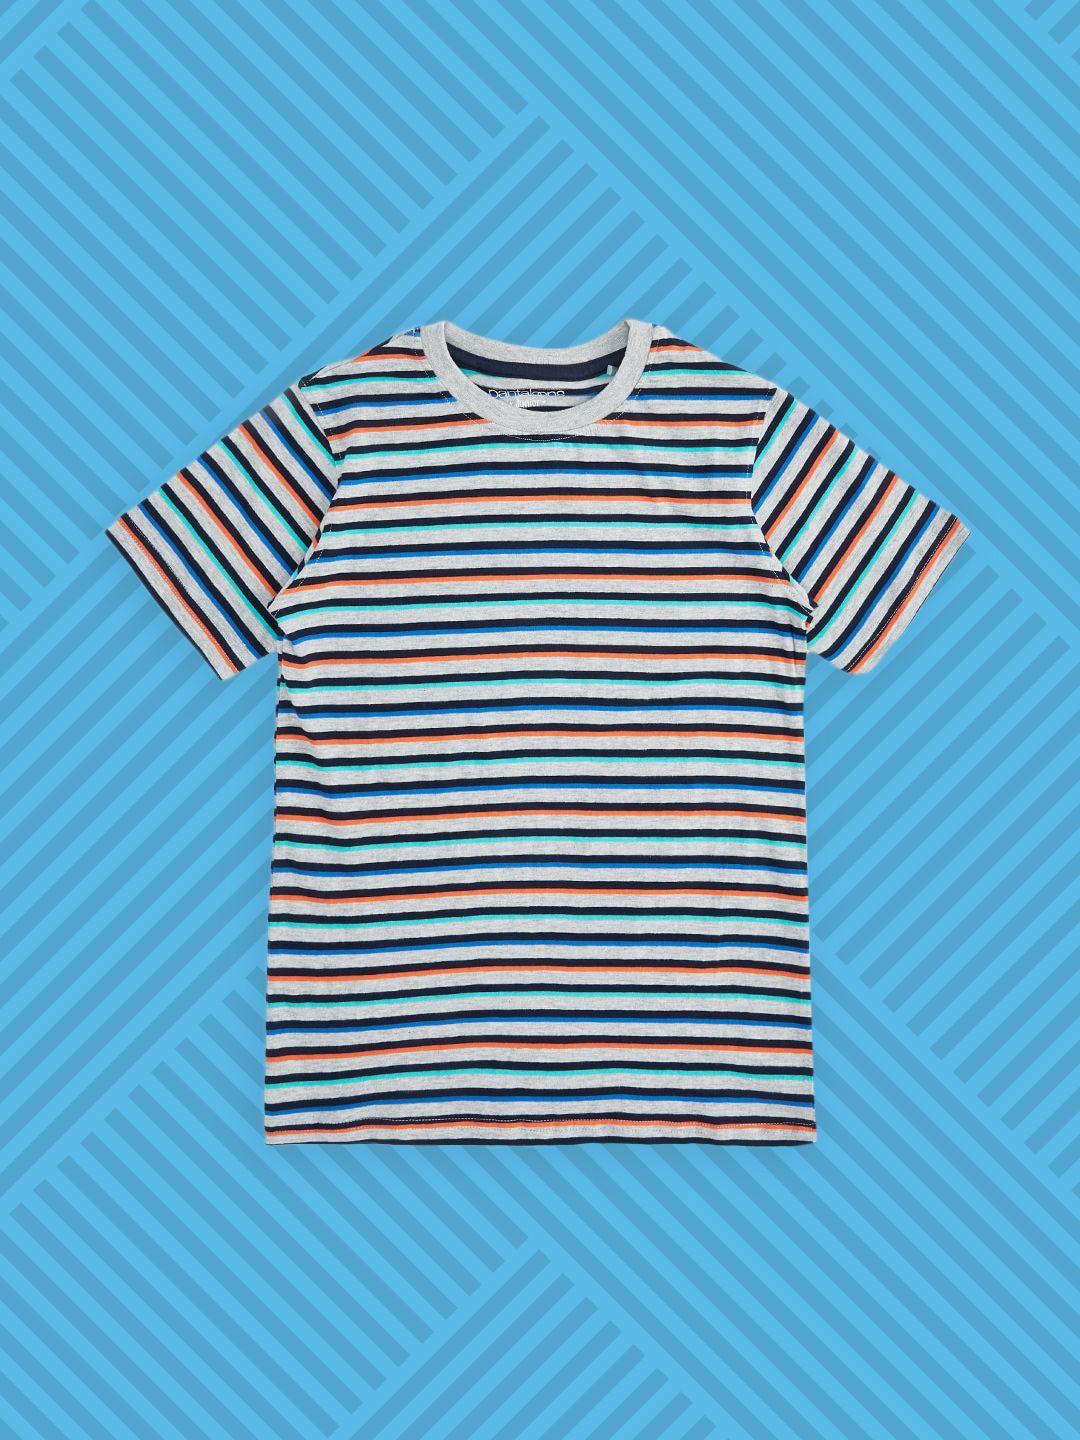 pantaloons junior boys grey melange & blue striped pure cotton t-shirt